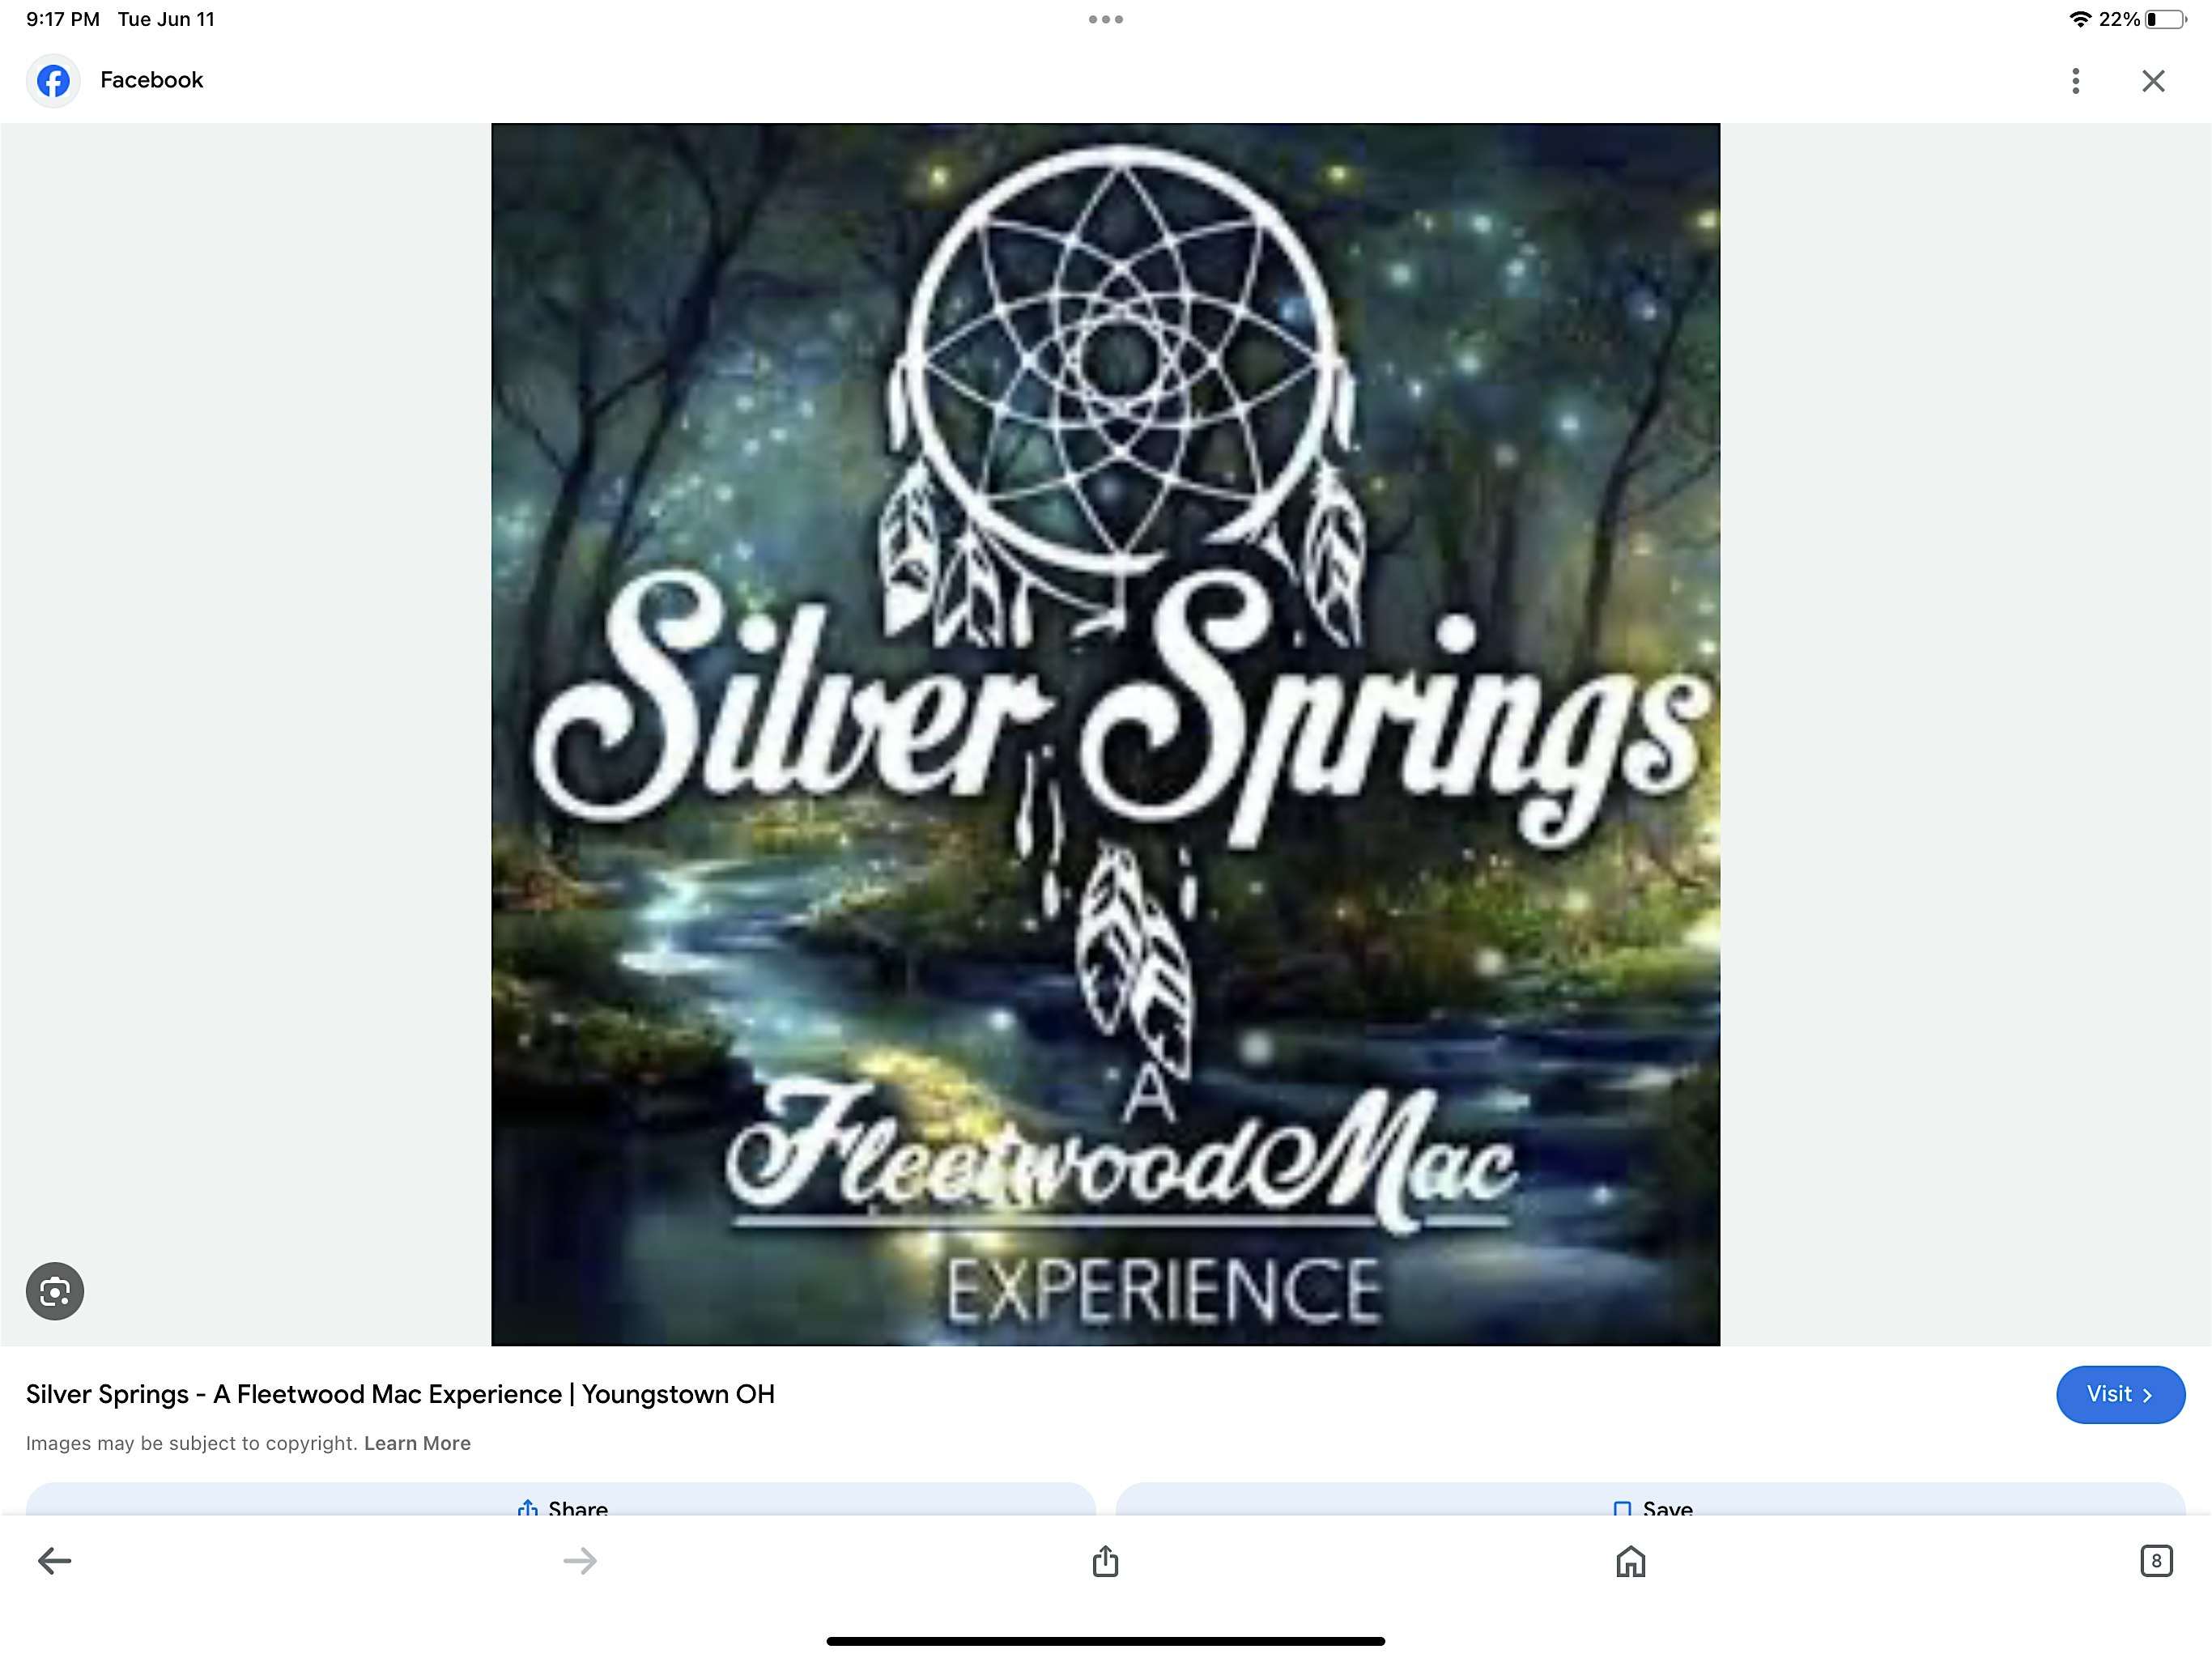 Silver Springs Fleetwood Mac Experience